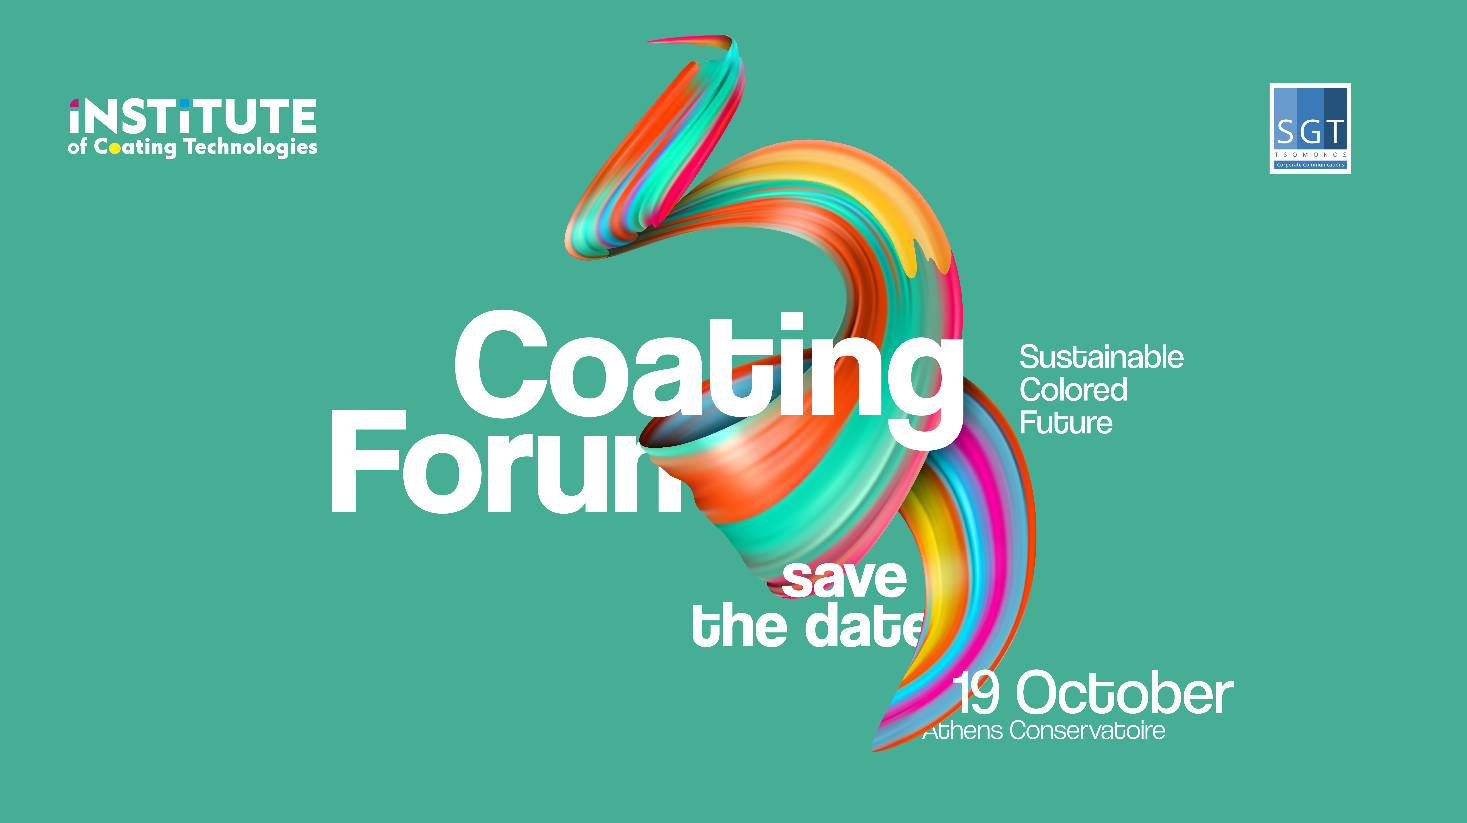 Archisearch Στις 19 Οκτωβρίου θα πραγματοποιηθεί το Συνέδριο «Coating Forum» στο Ωδείο Αθηνών, από το Institute of Coating Technologies (IoCT) και την Tsomokos Communications.